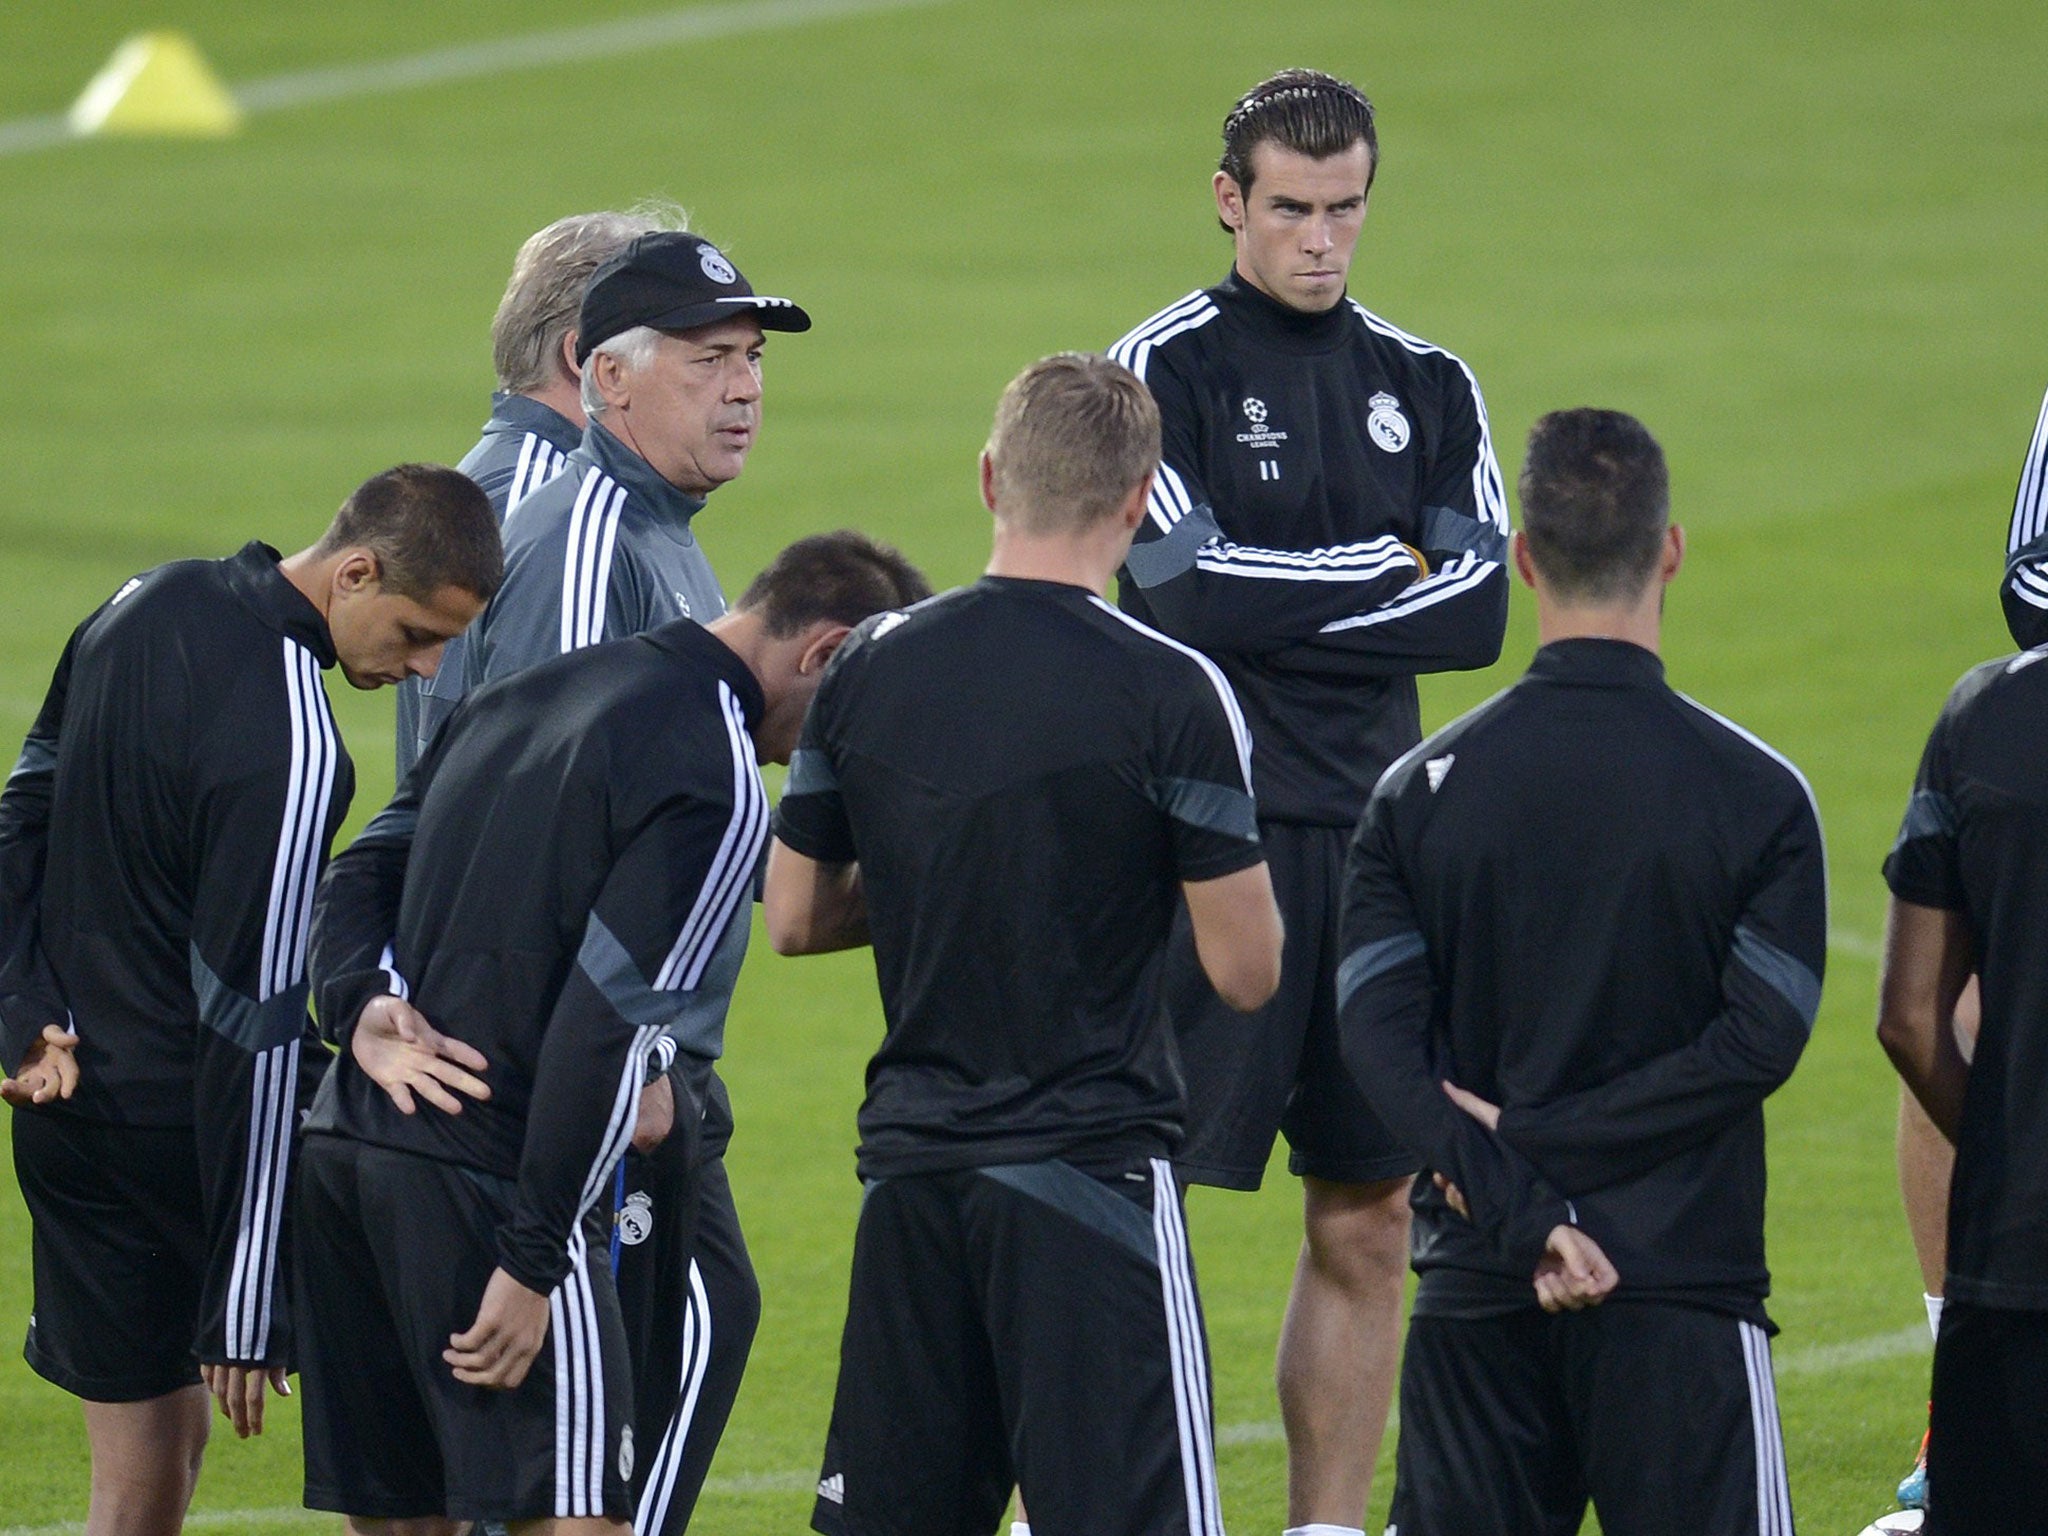 Ancelotti with his squad